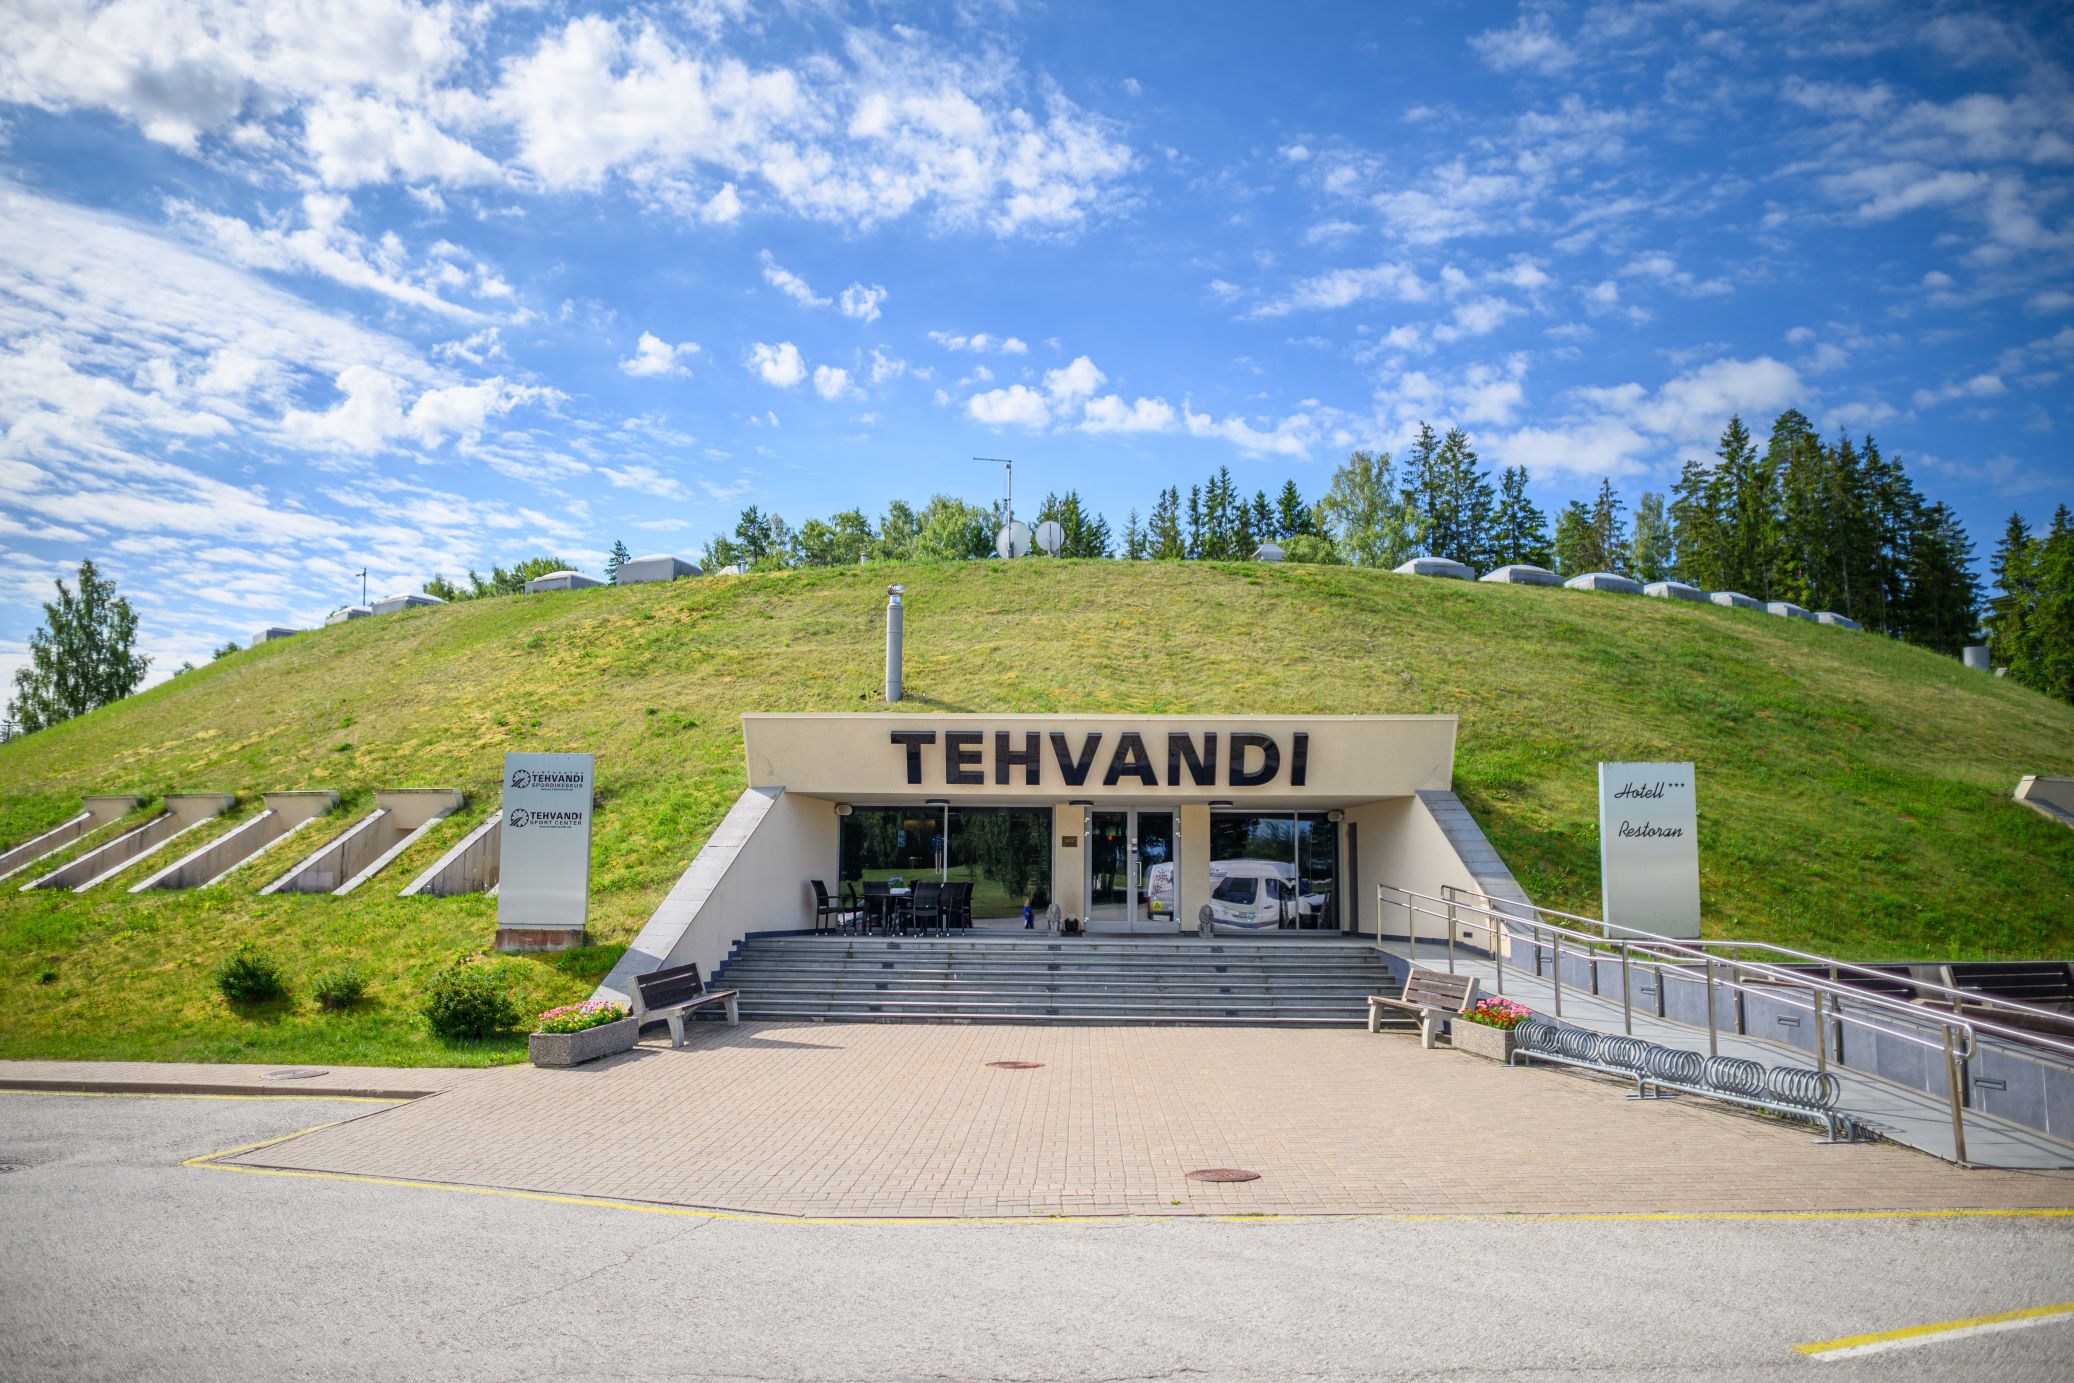 Tehvandi hotel at Tehvandi Sport Centre